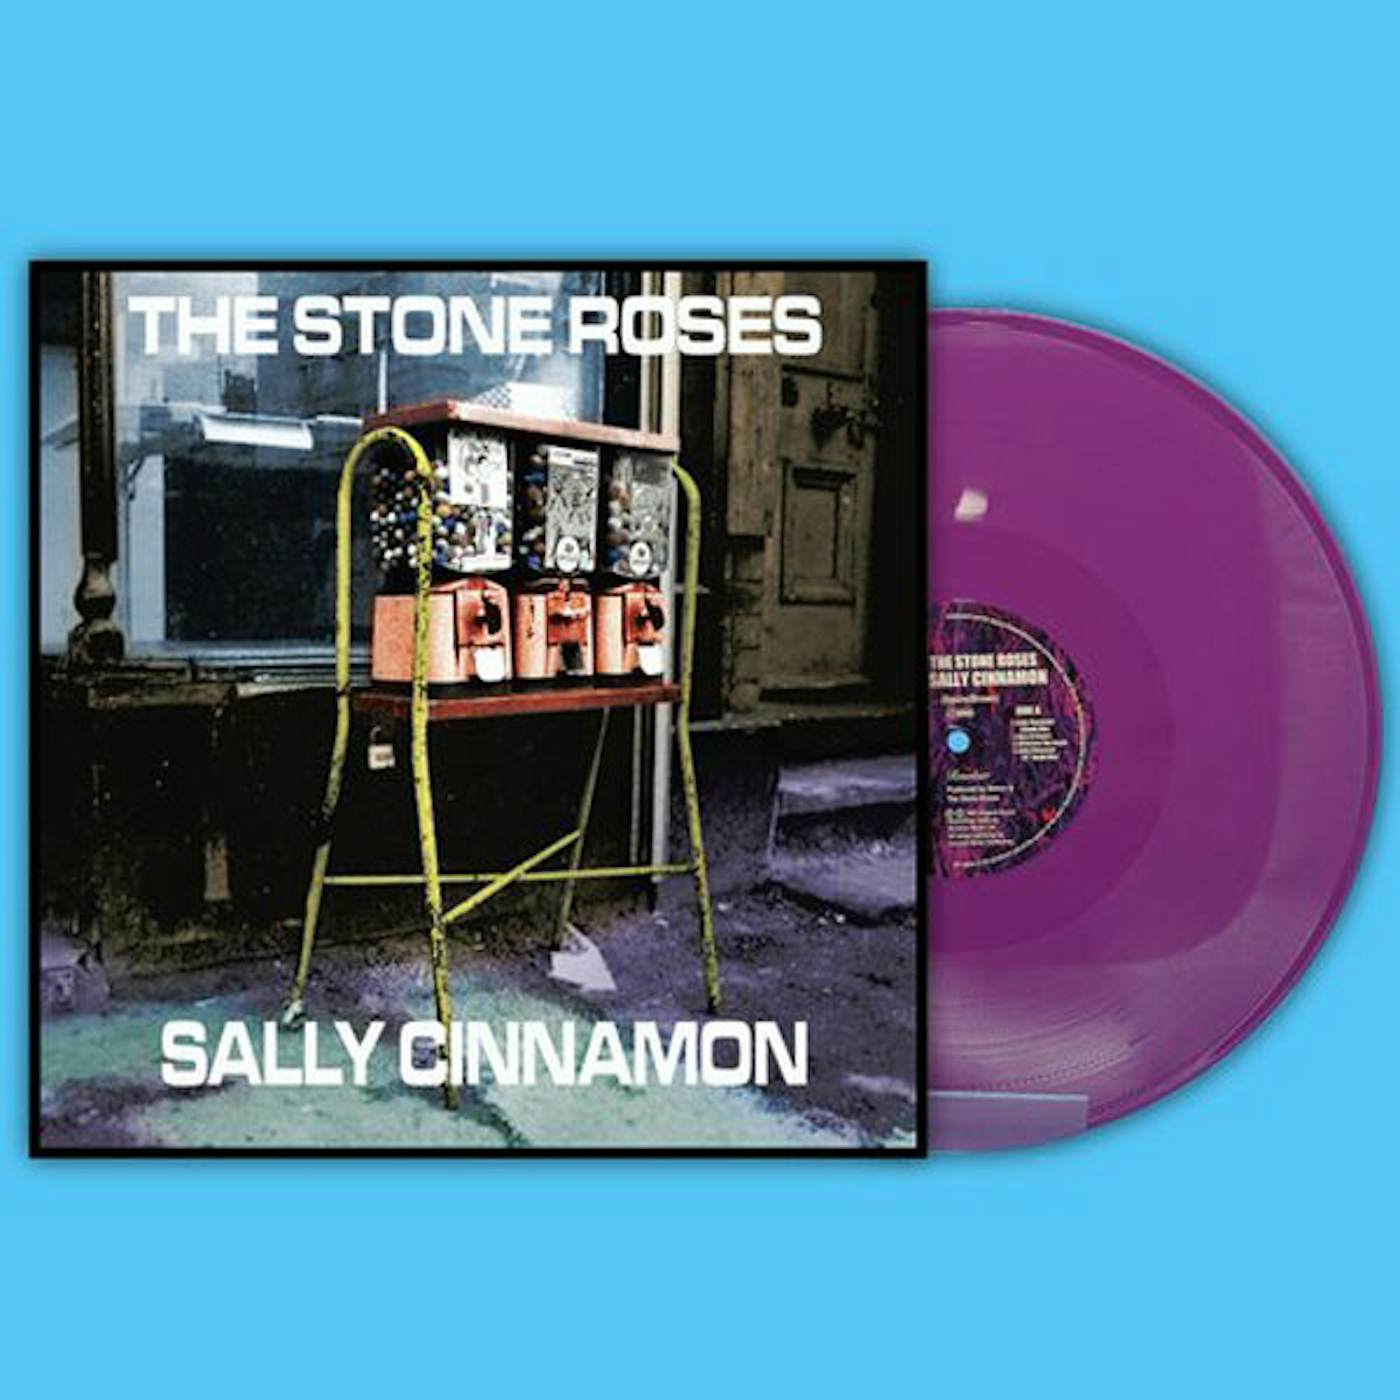 The Stone Roses LP - Sally Cinnamon + Live (Purple Vinyl)